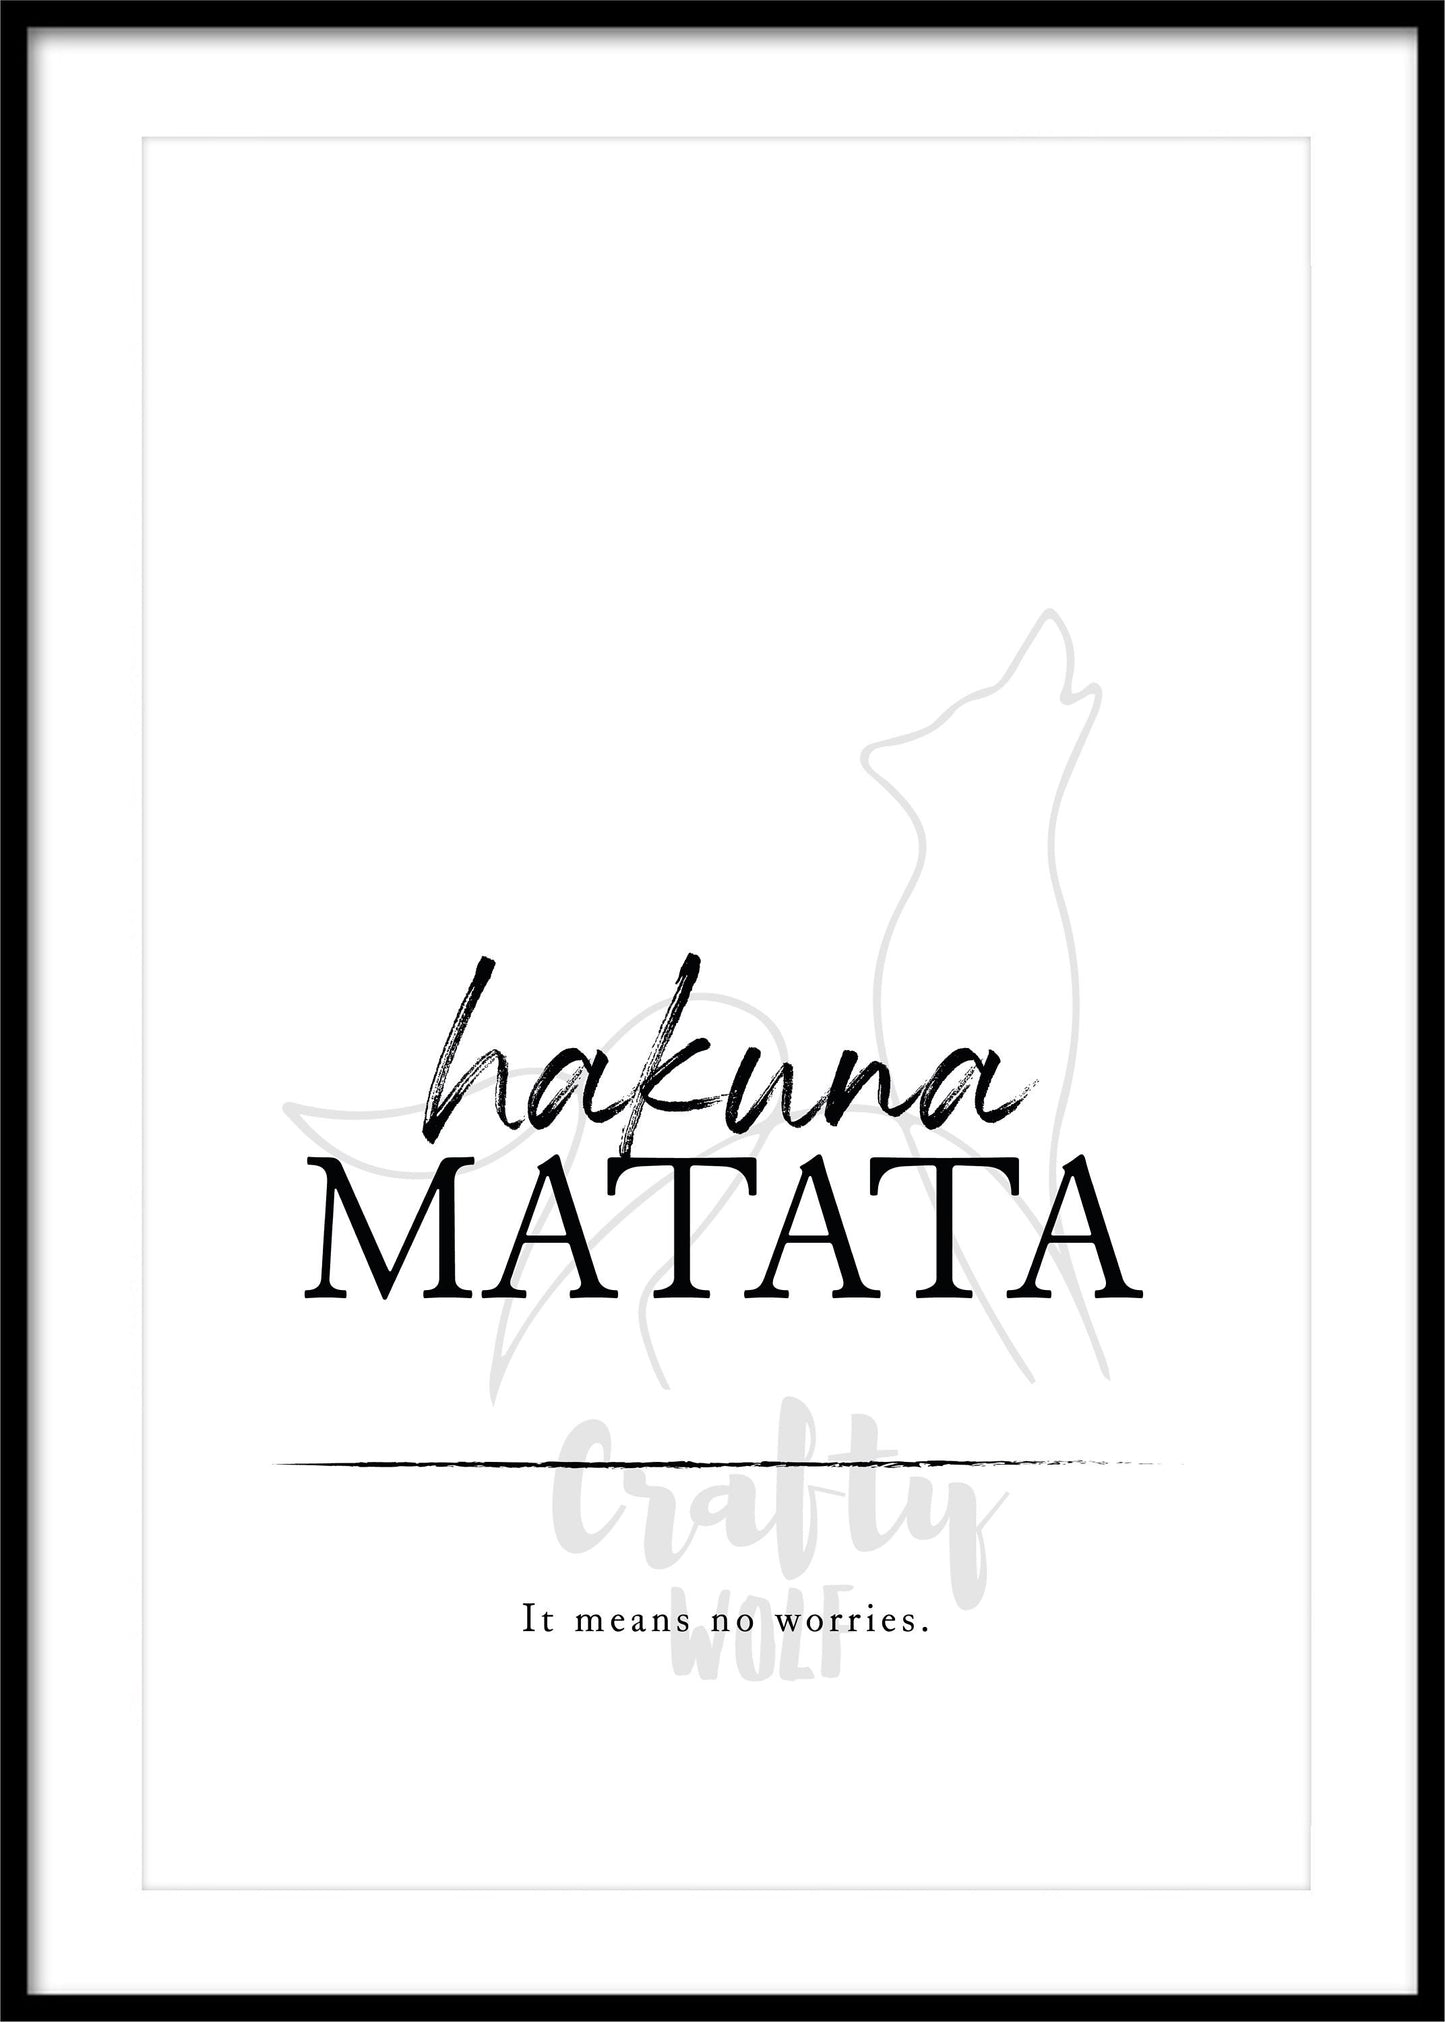 'Hakuna Matata' - Inspirational Print Quotes